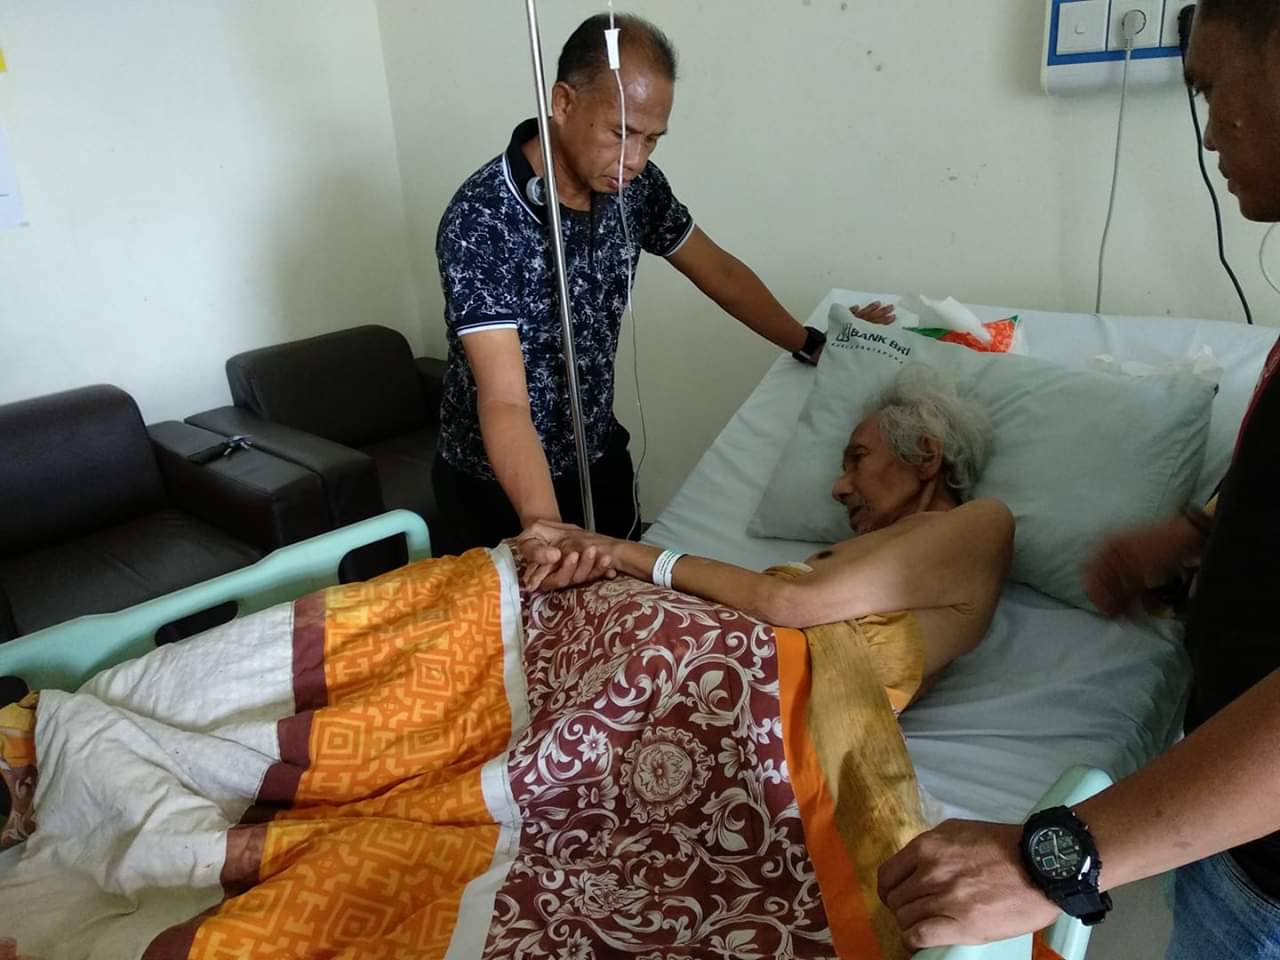  Kabar duka datang dari Banjarbaru. Mantan Walikota Banjarbaru, A Fakhruli tutup usia di RS Idaman Banjarbaru, Sabtu (20/10/2018) sekira pukul 12.30 Wita.